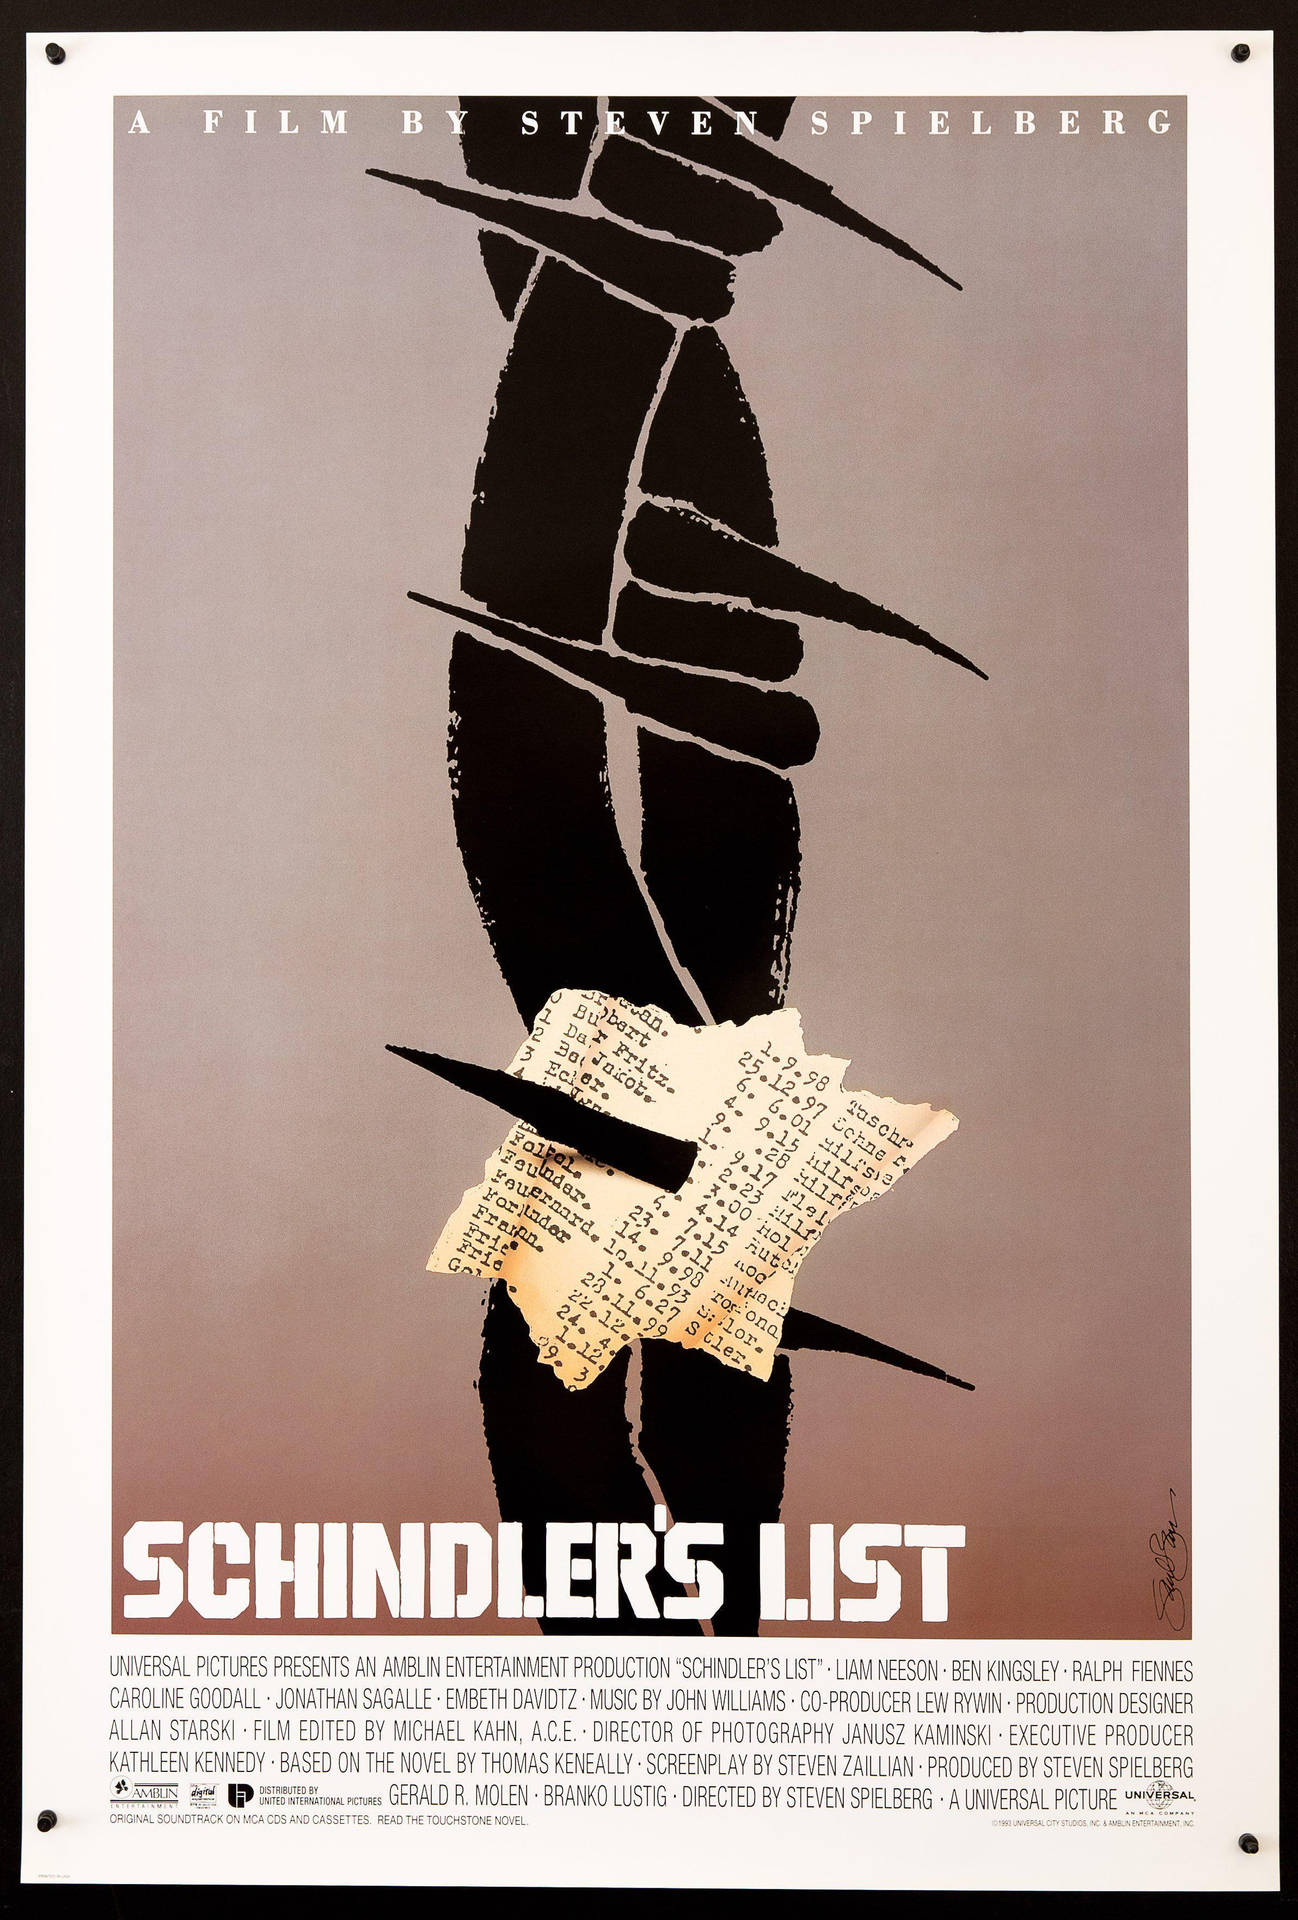 Schindler's List Barbed Wires Digital Art Wallpaper